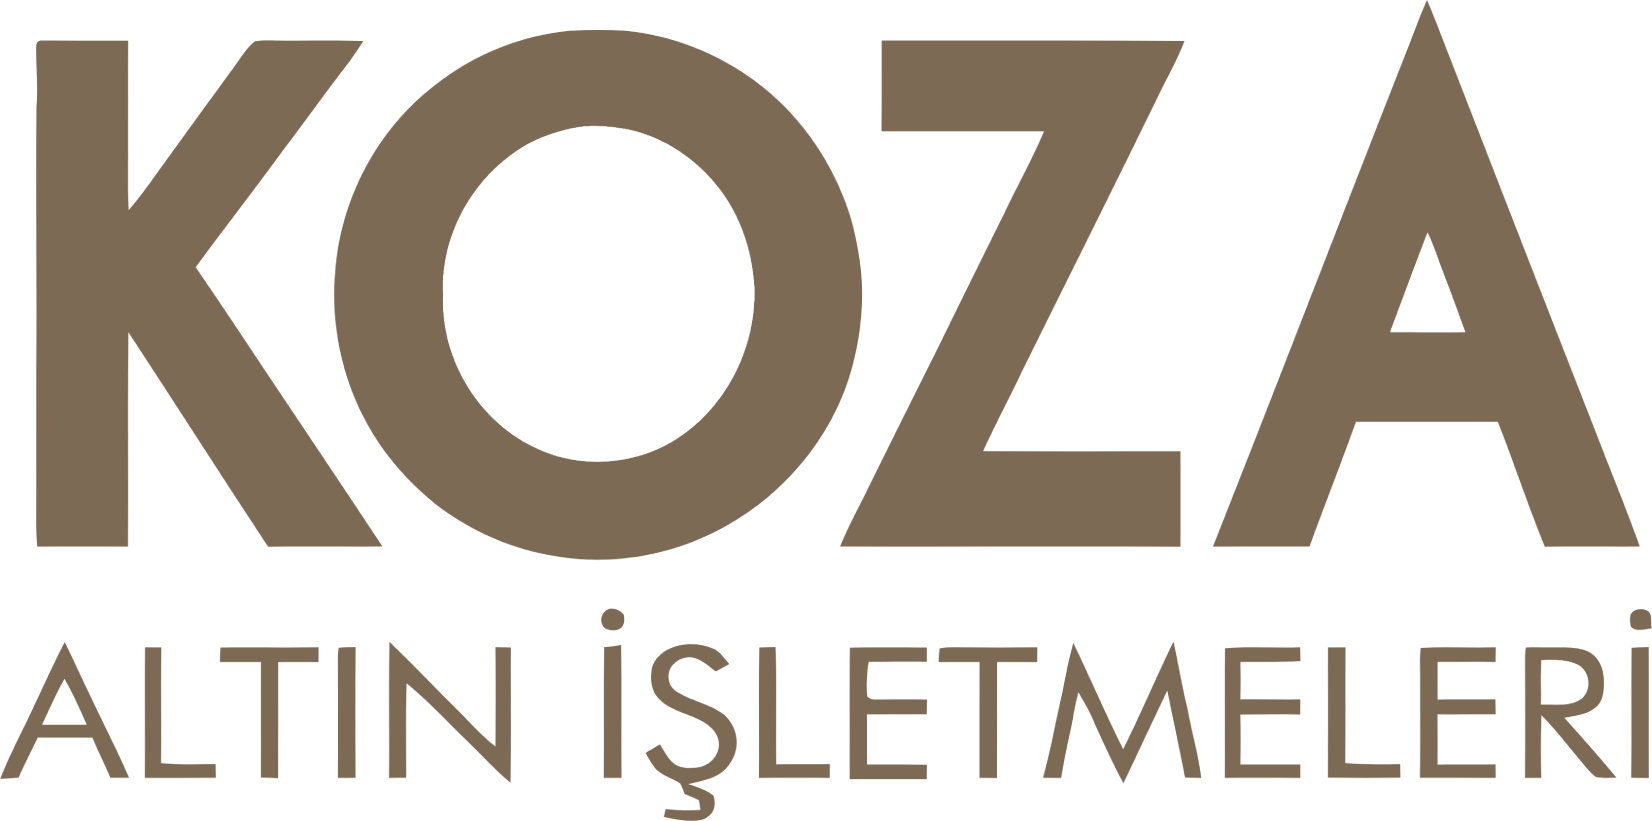 Koza Gold logo large (transparent PNG)